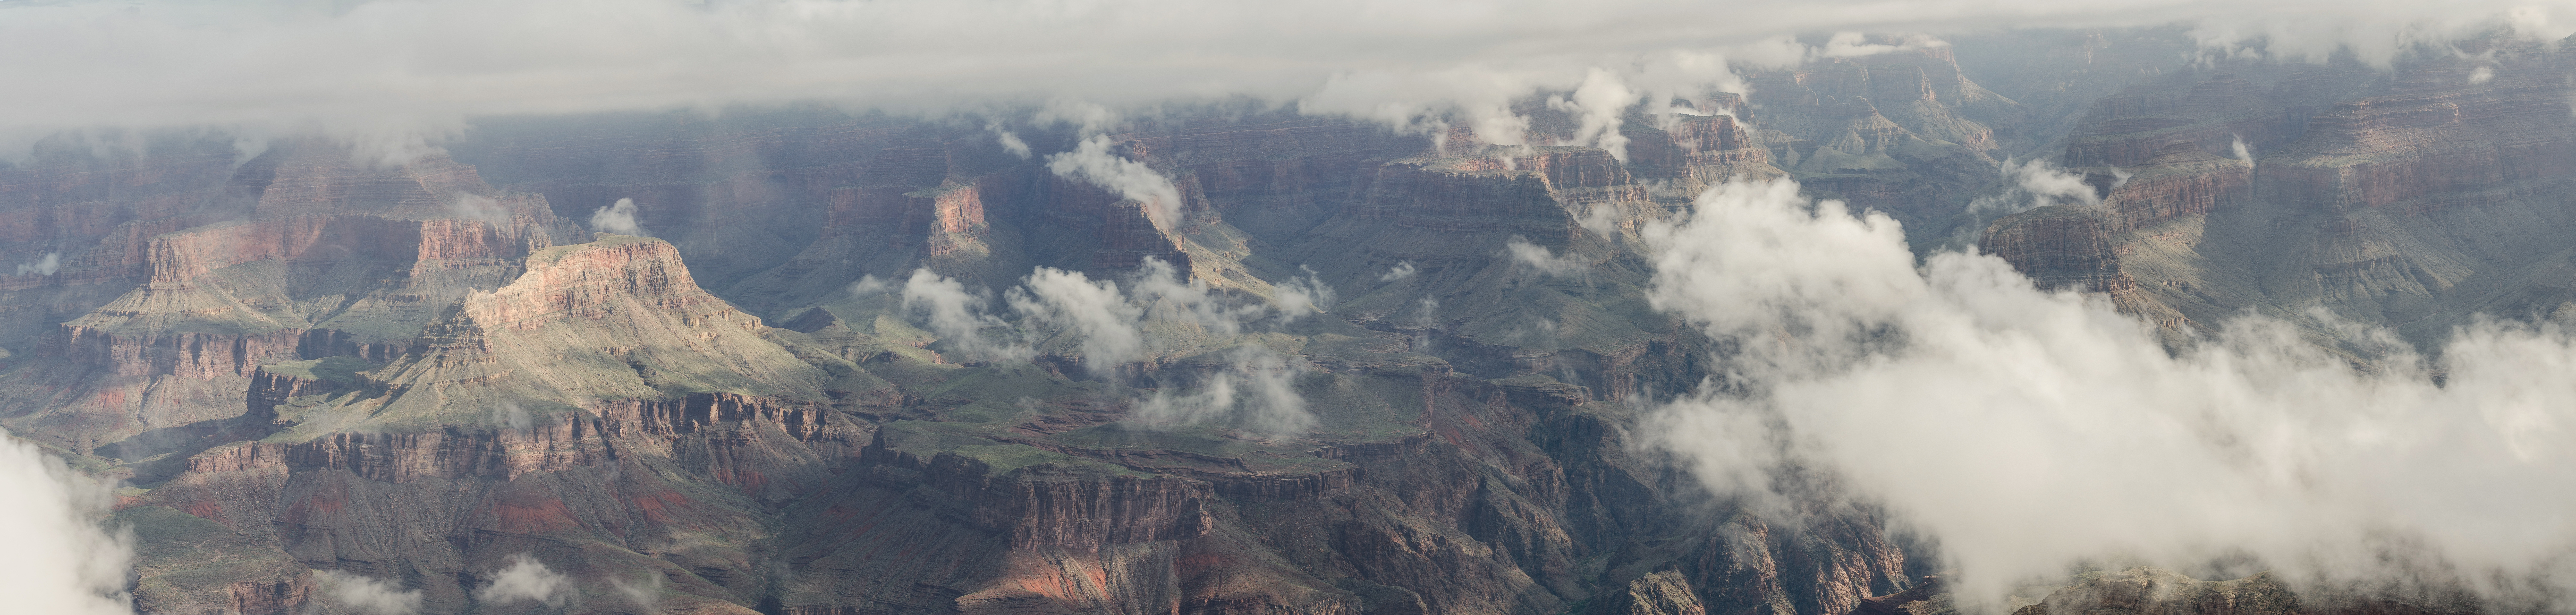 File:Grand Canyon Mather Point Cloudy Panorama 2013.jpg - Wikimedia ...